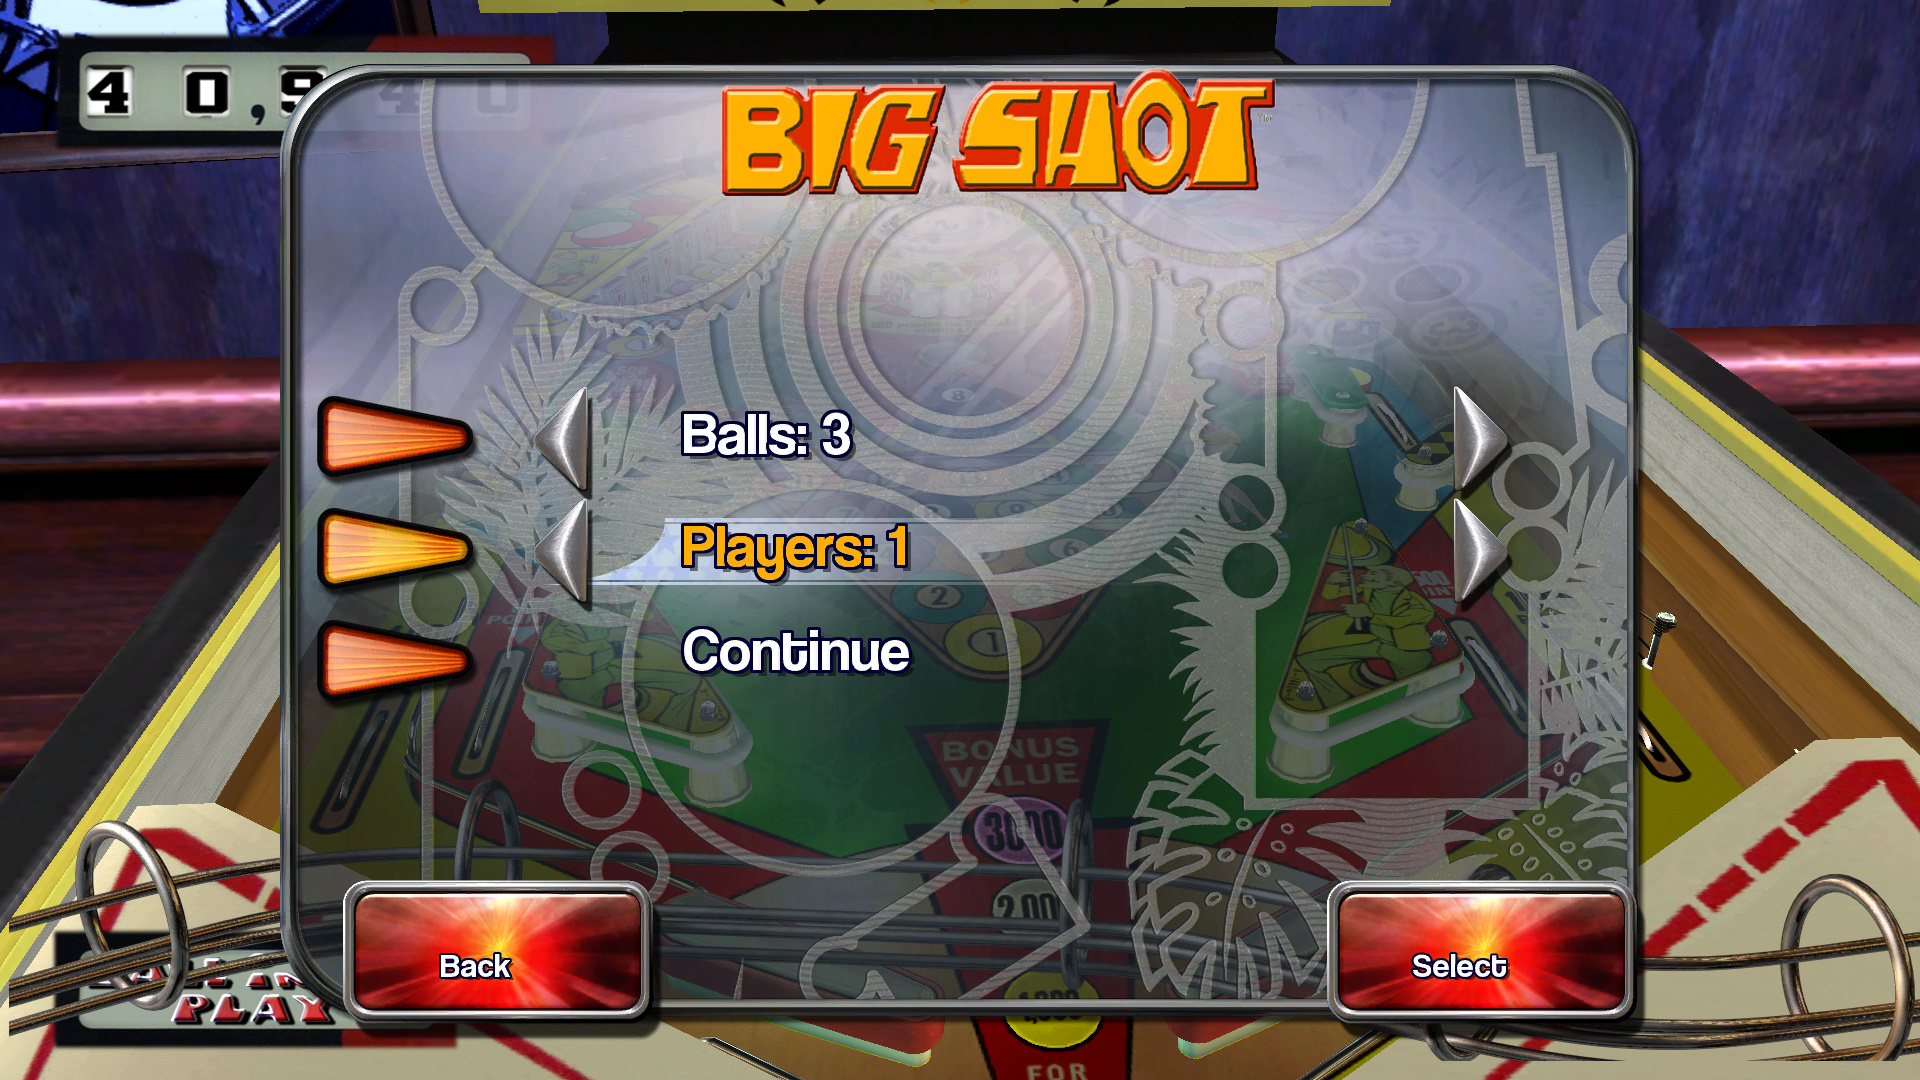 TheTrickster: Pinball Arcade: Big Shot [3 Balls] (PC) 240,940 points on 2015-09-15 03:49:14